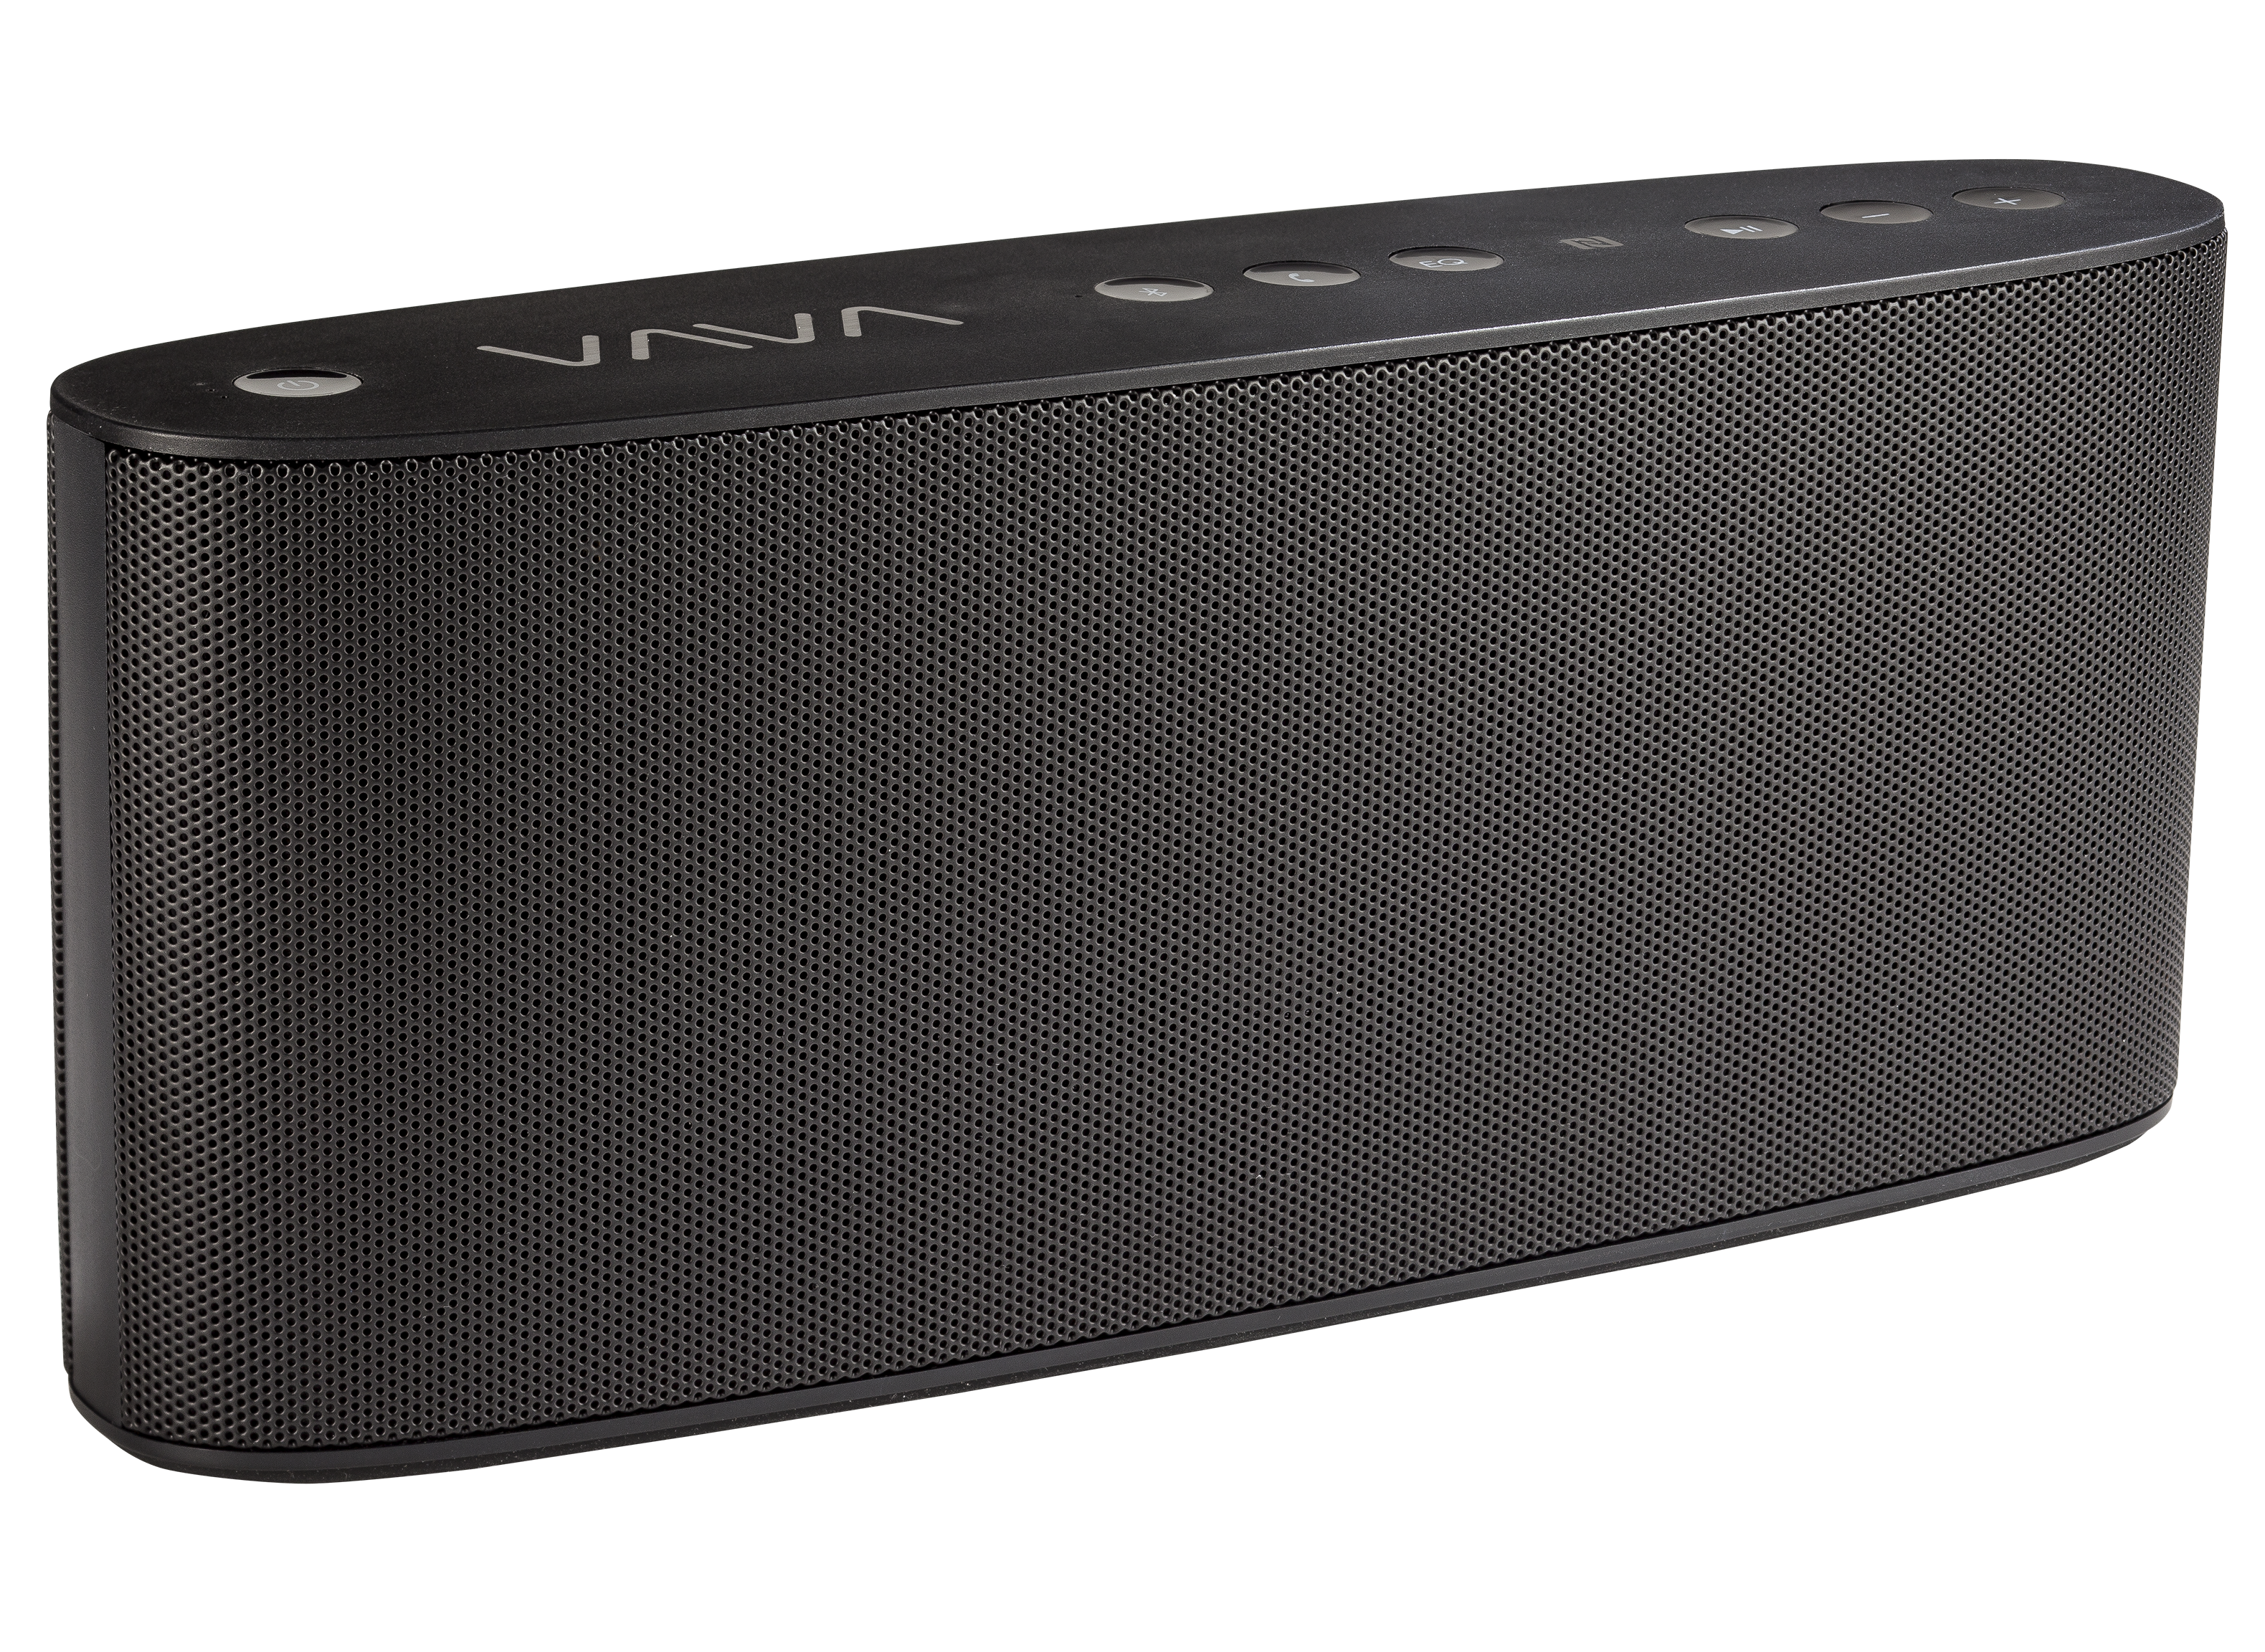 Vava Voom 20 Speaker Review: Big Sound, Small Price